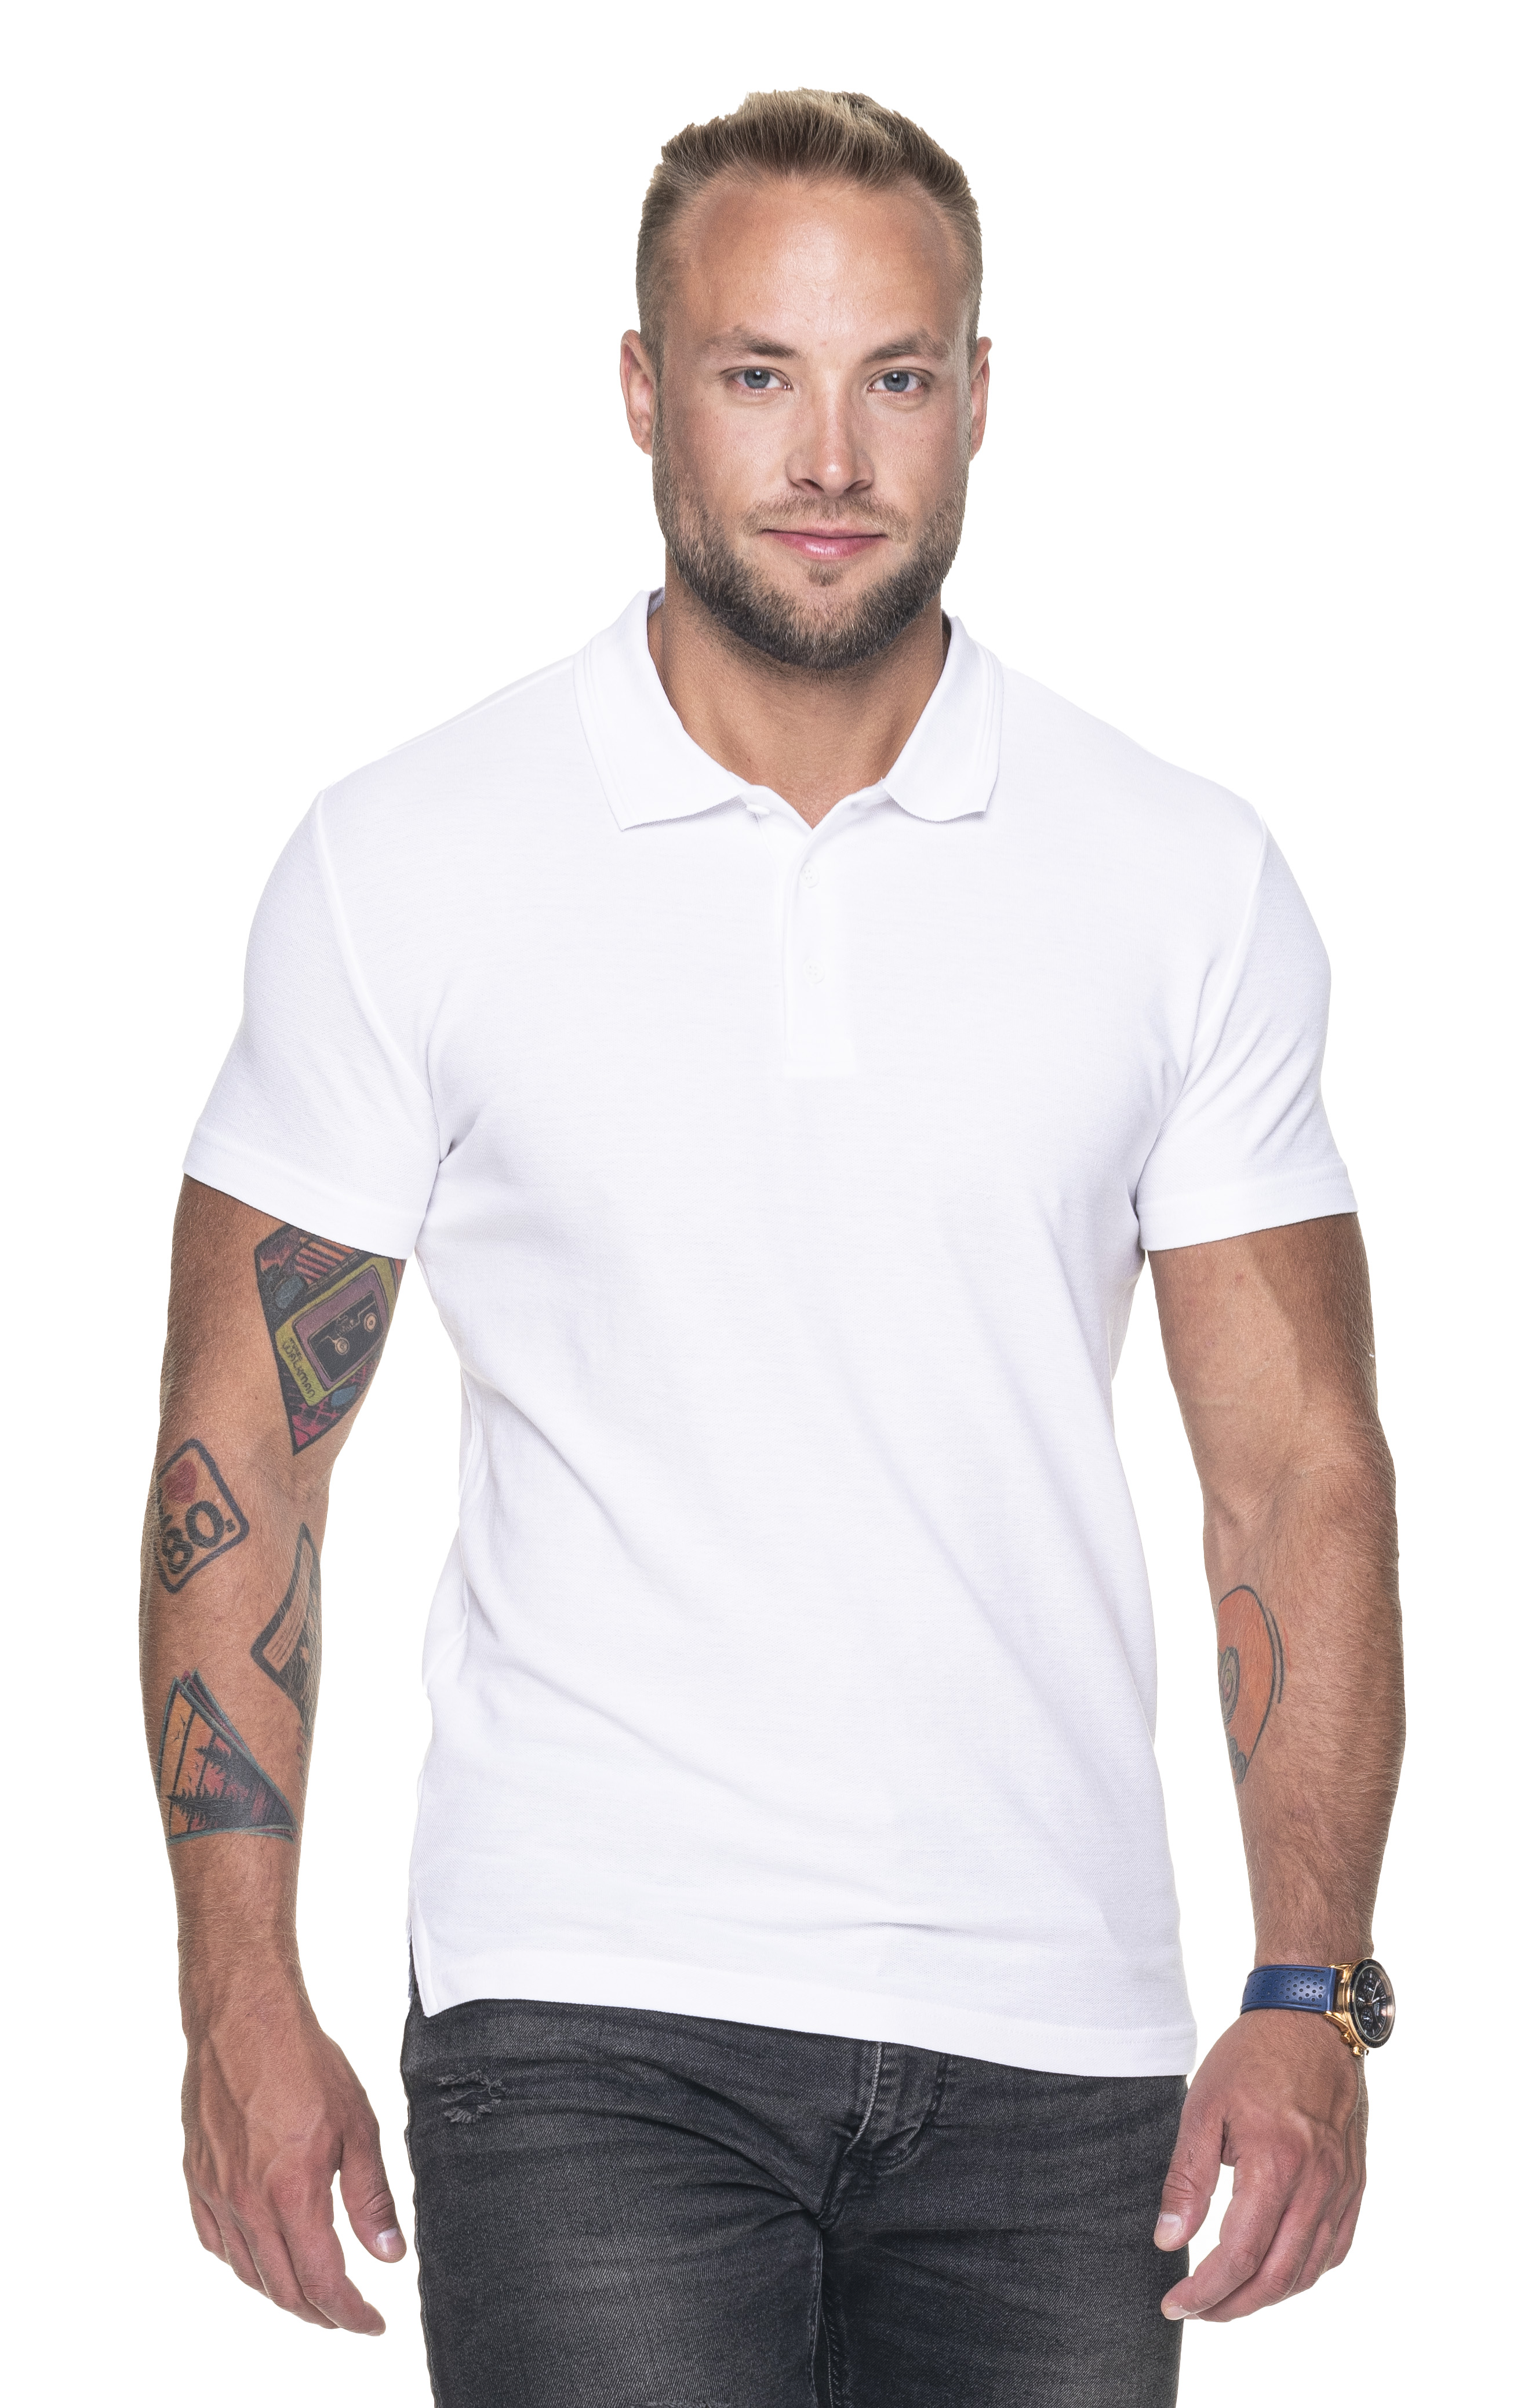 Koszulka Promostars Polo Cotton Slim - biała